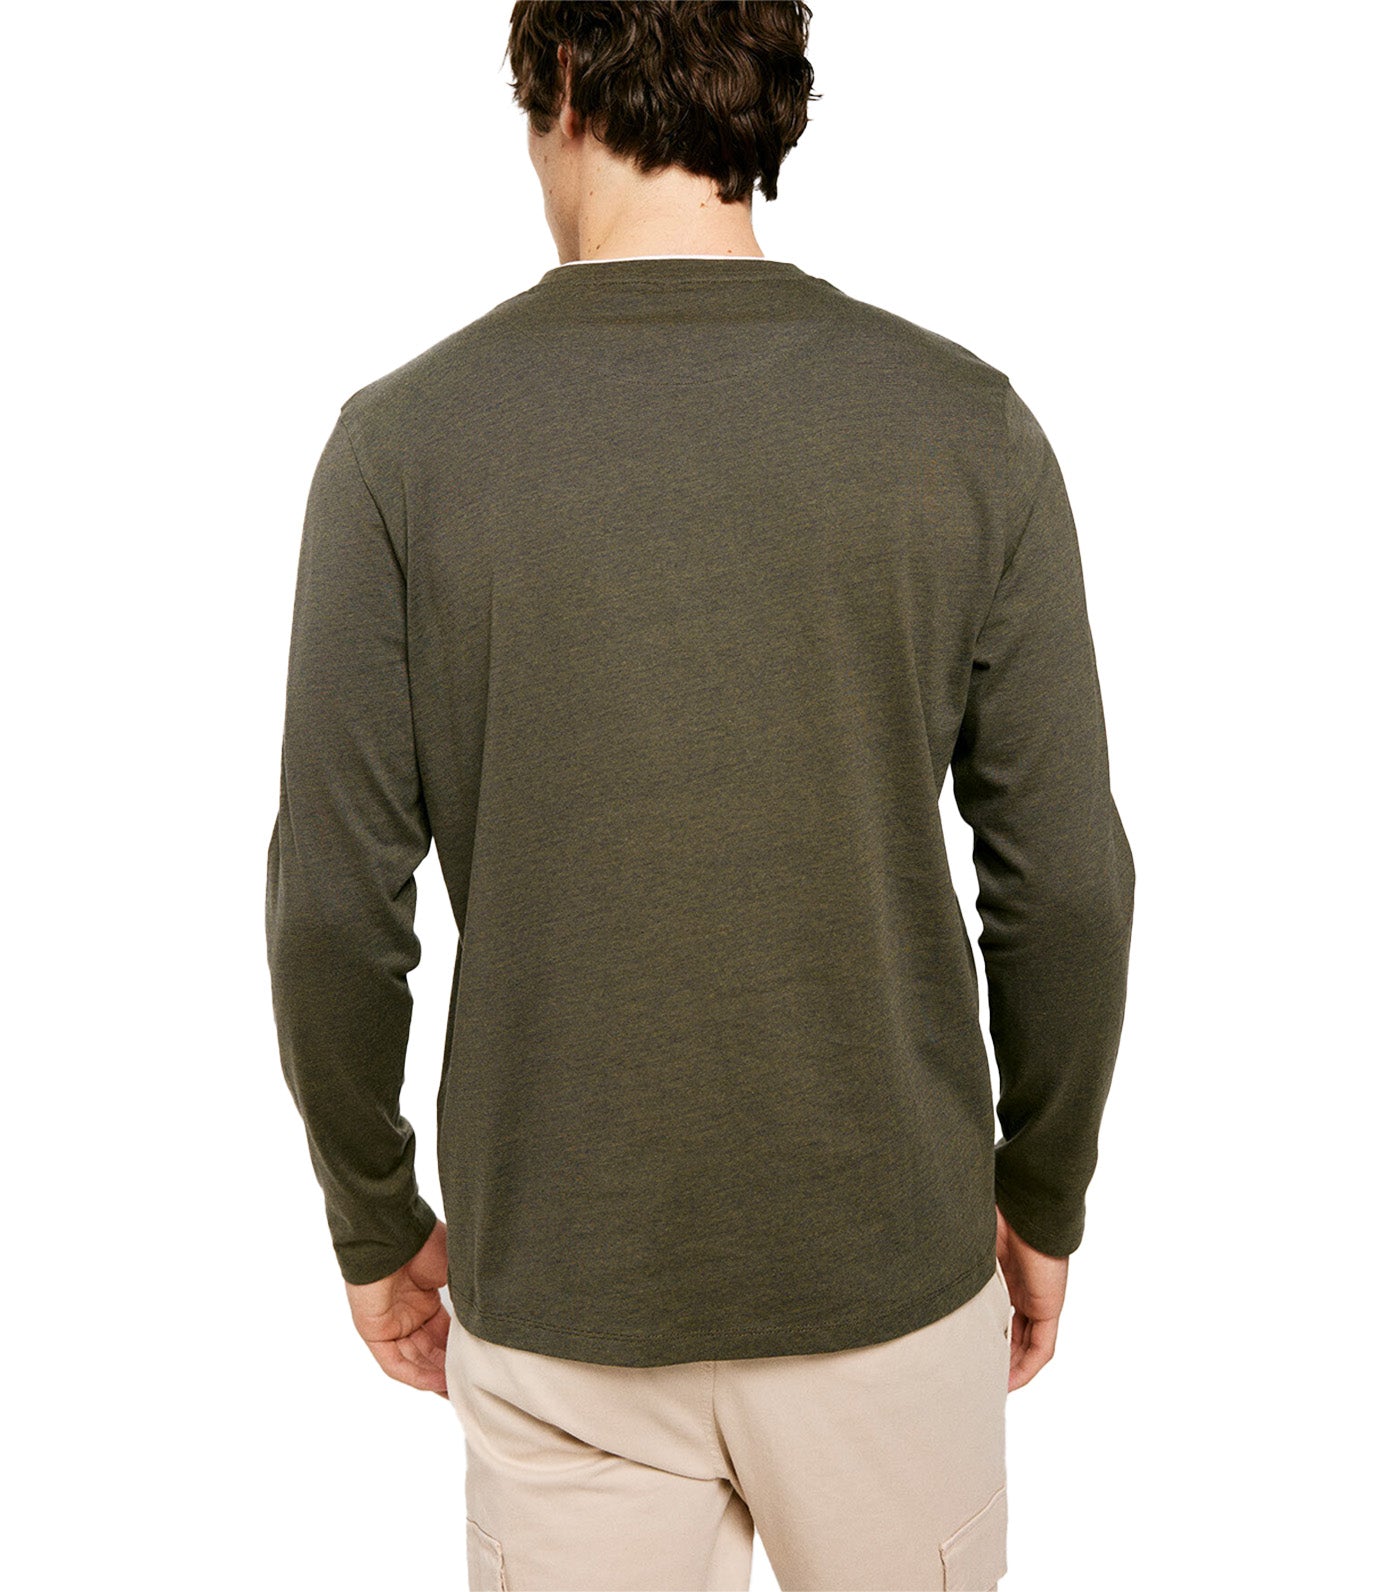 Double Microstripe Long Sleeve T-Shirt Khaki